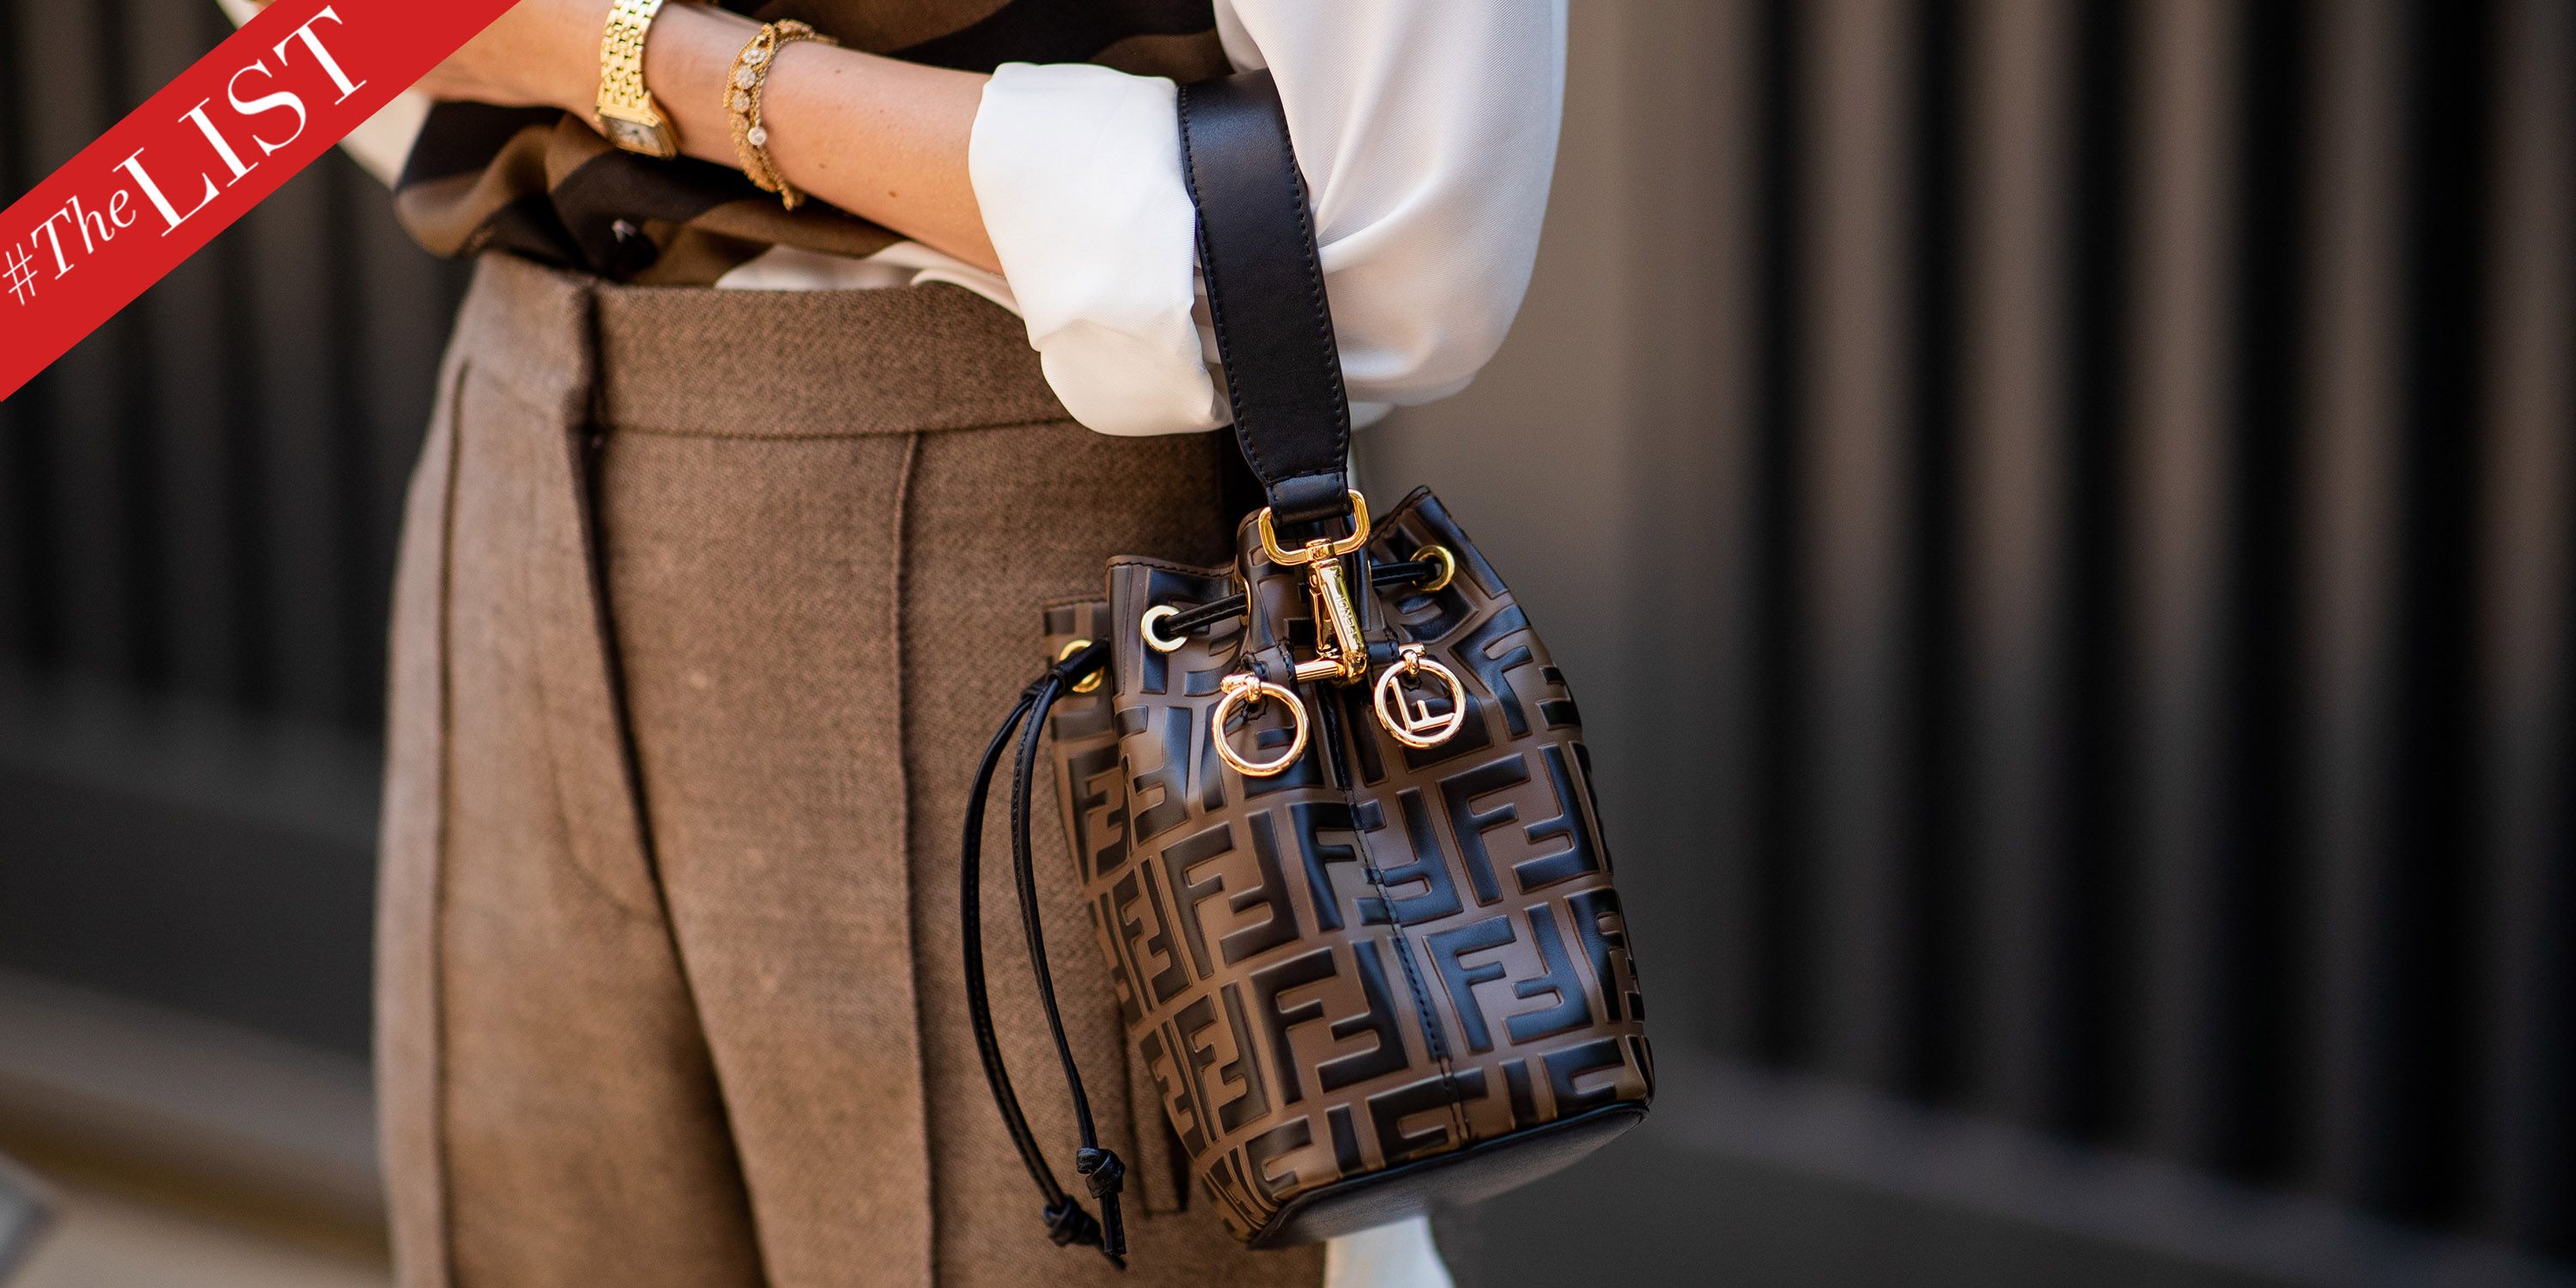 Bukvy Bag - Minimalist bags and accessories | LinkedIn